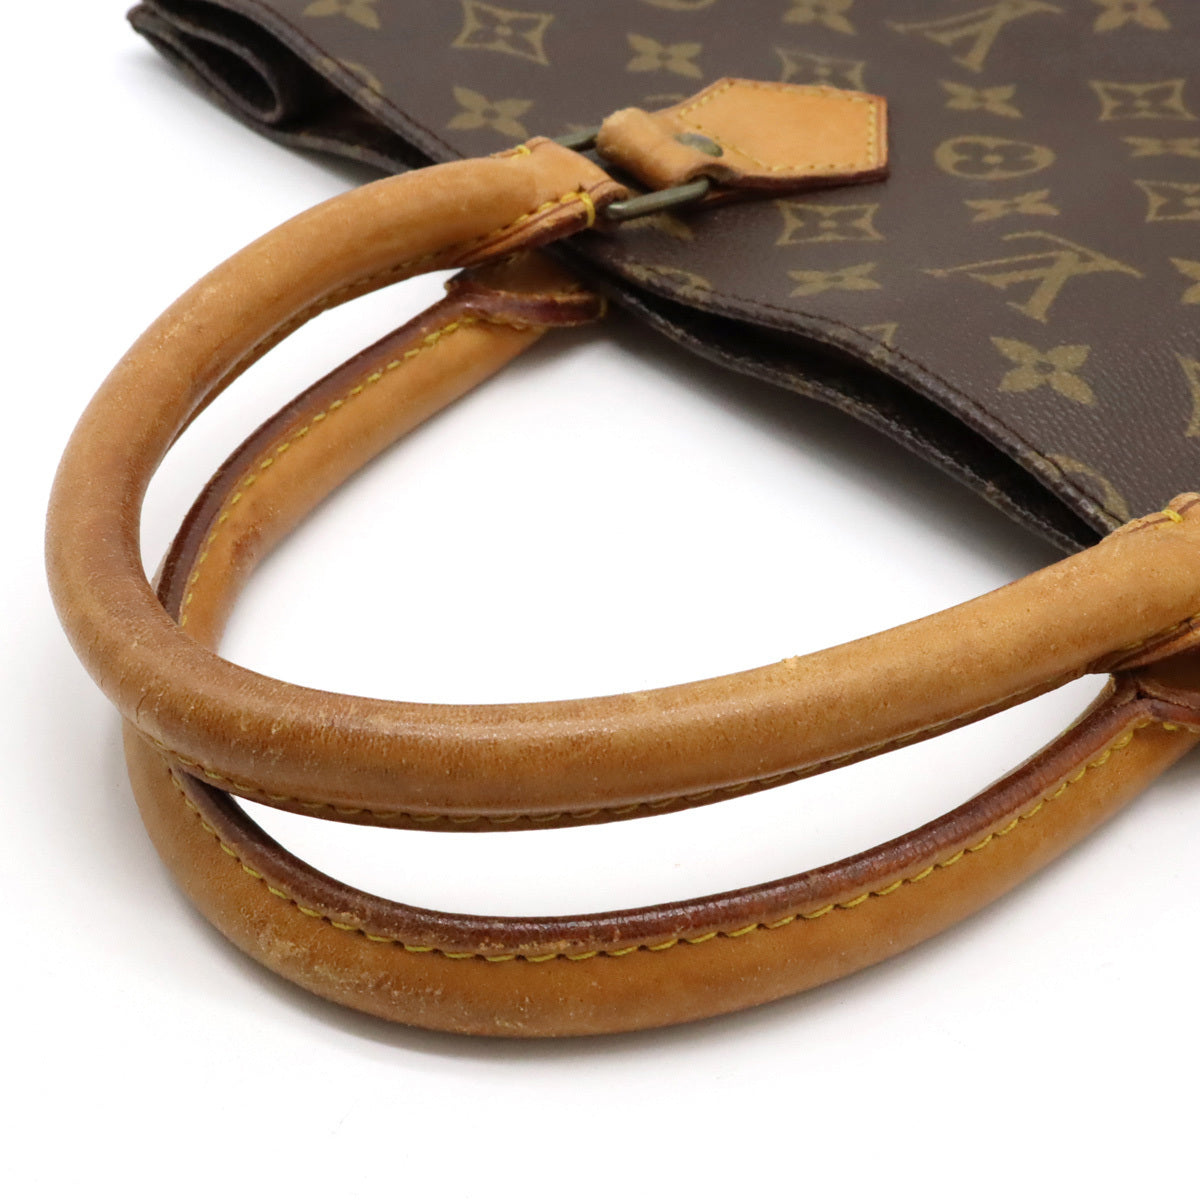 Heritage Vintage: Louis Vuitton Black Epi Belt with Gold Buckle